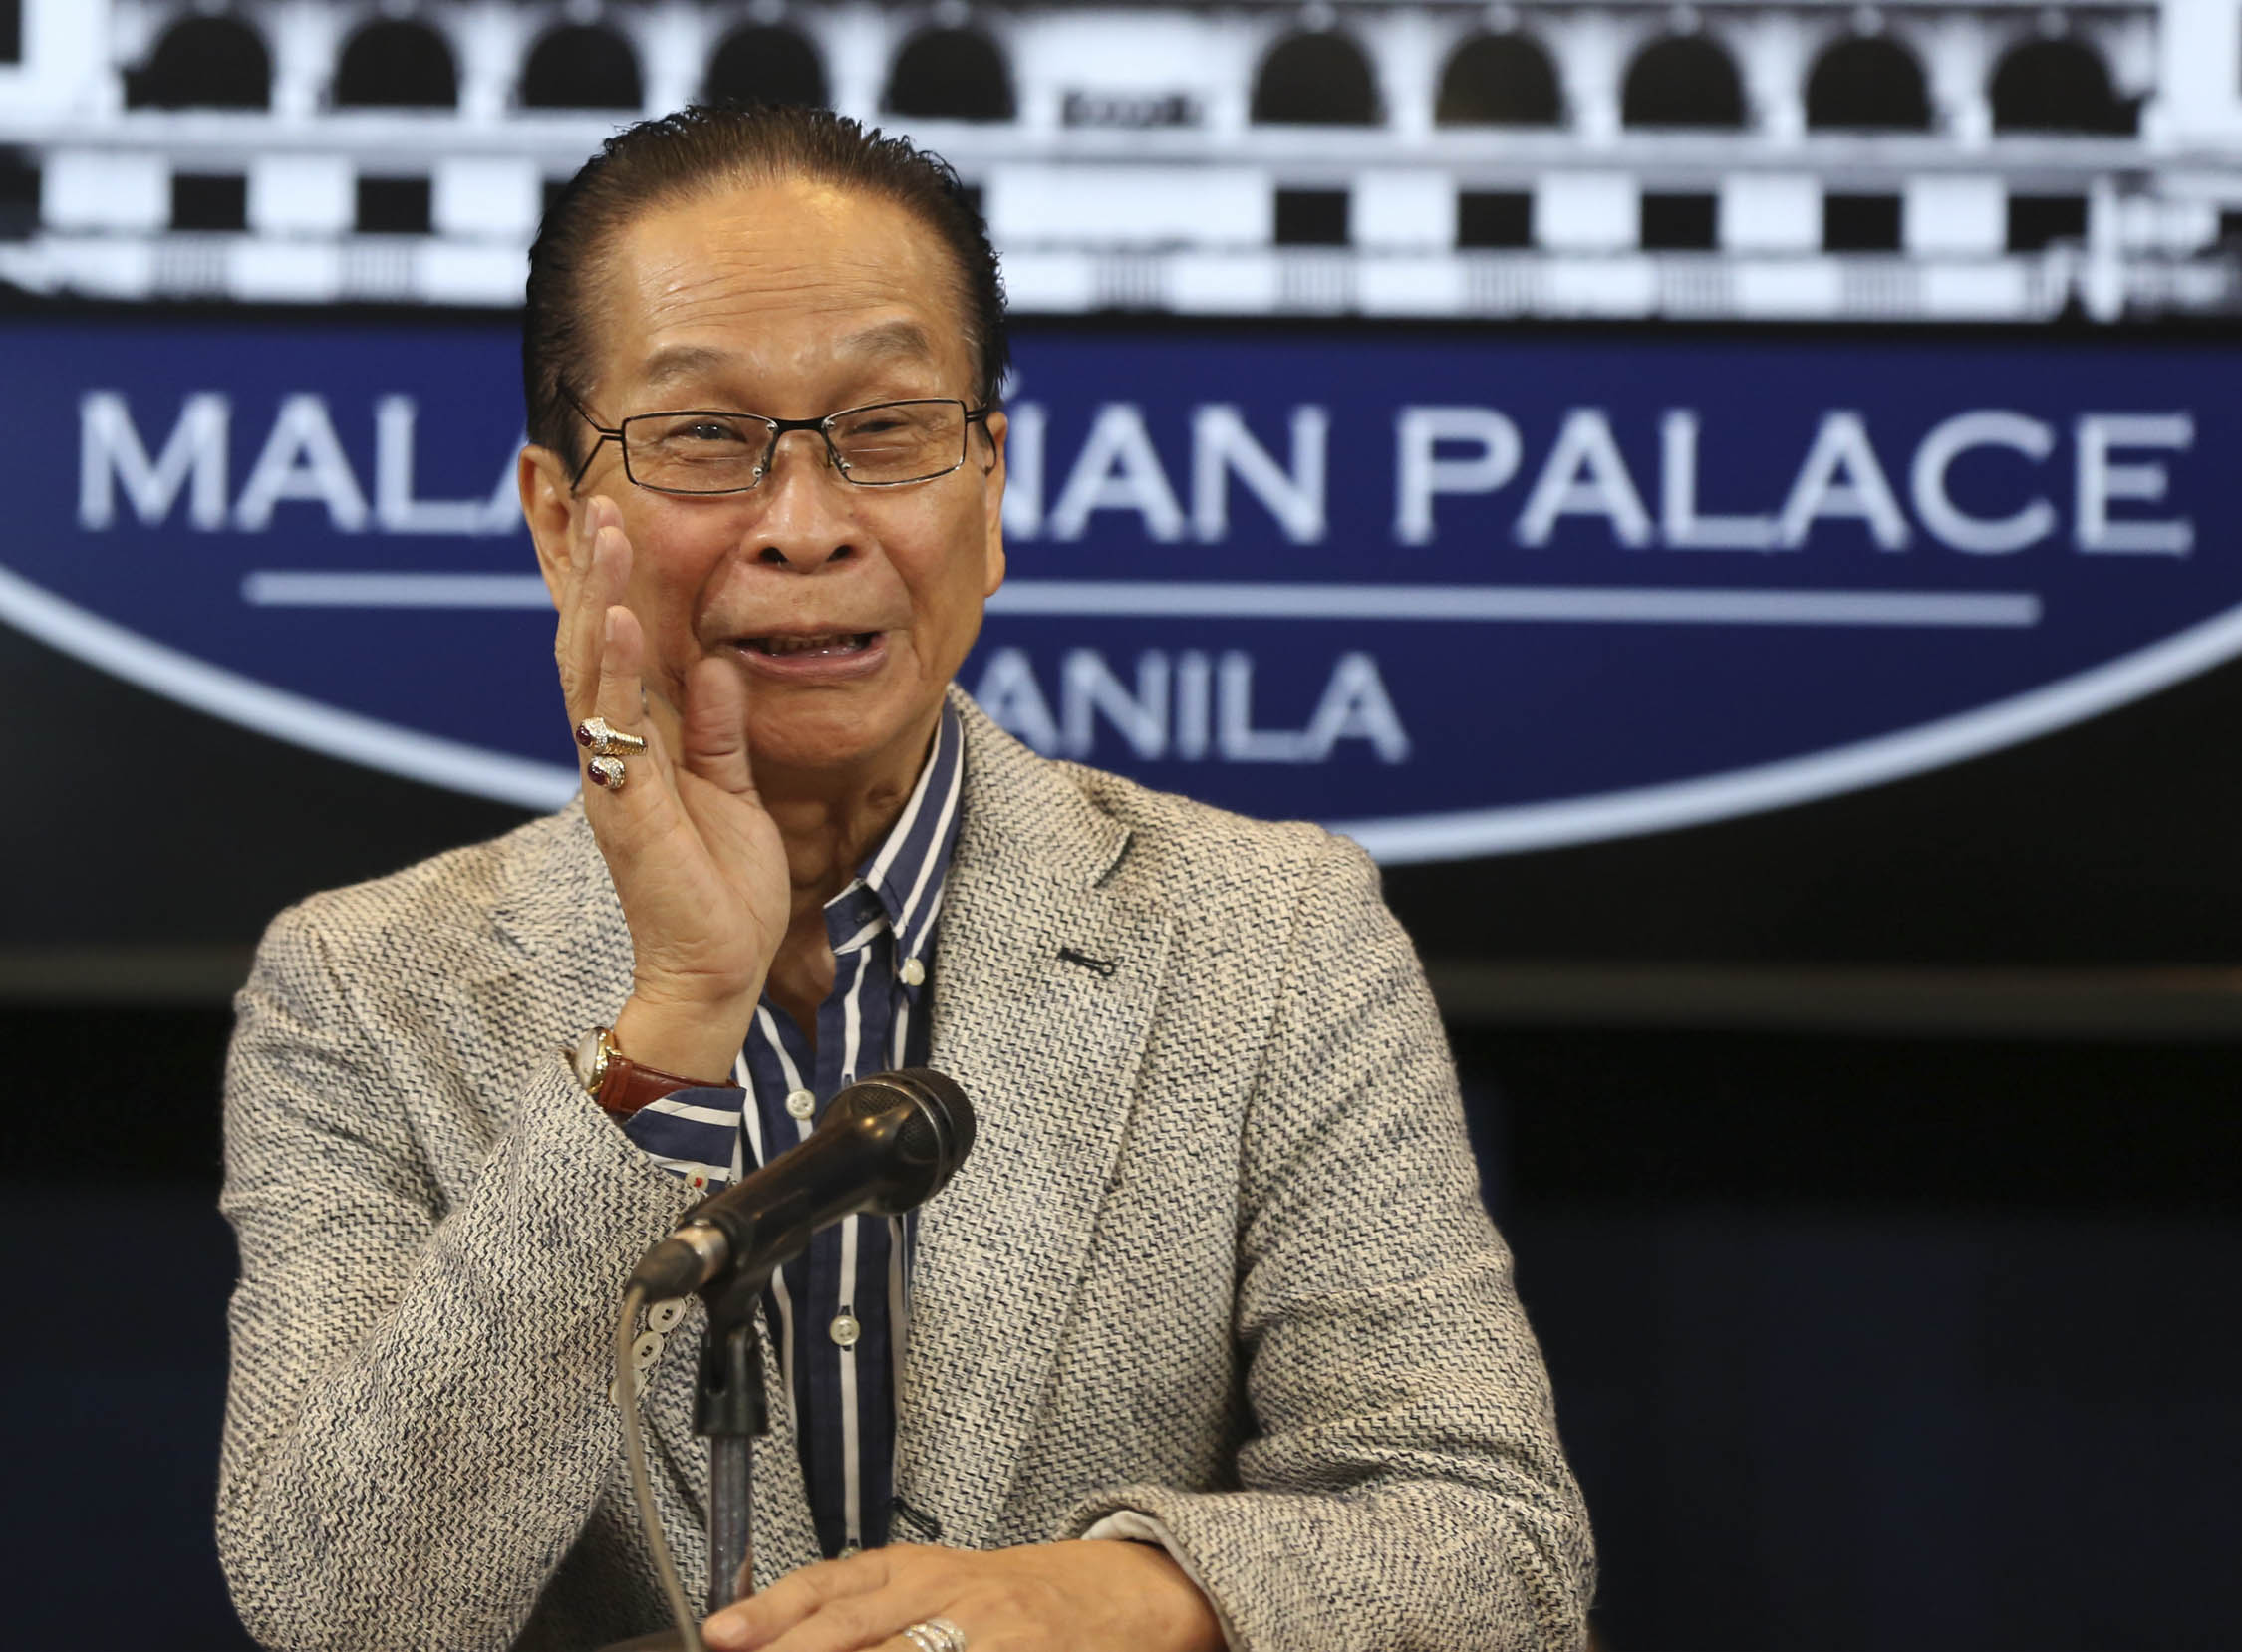 Palace: Duterte’s 7-8 million drug users estimate refers to 'national figure'